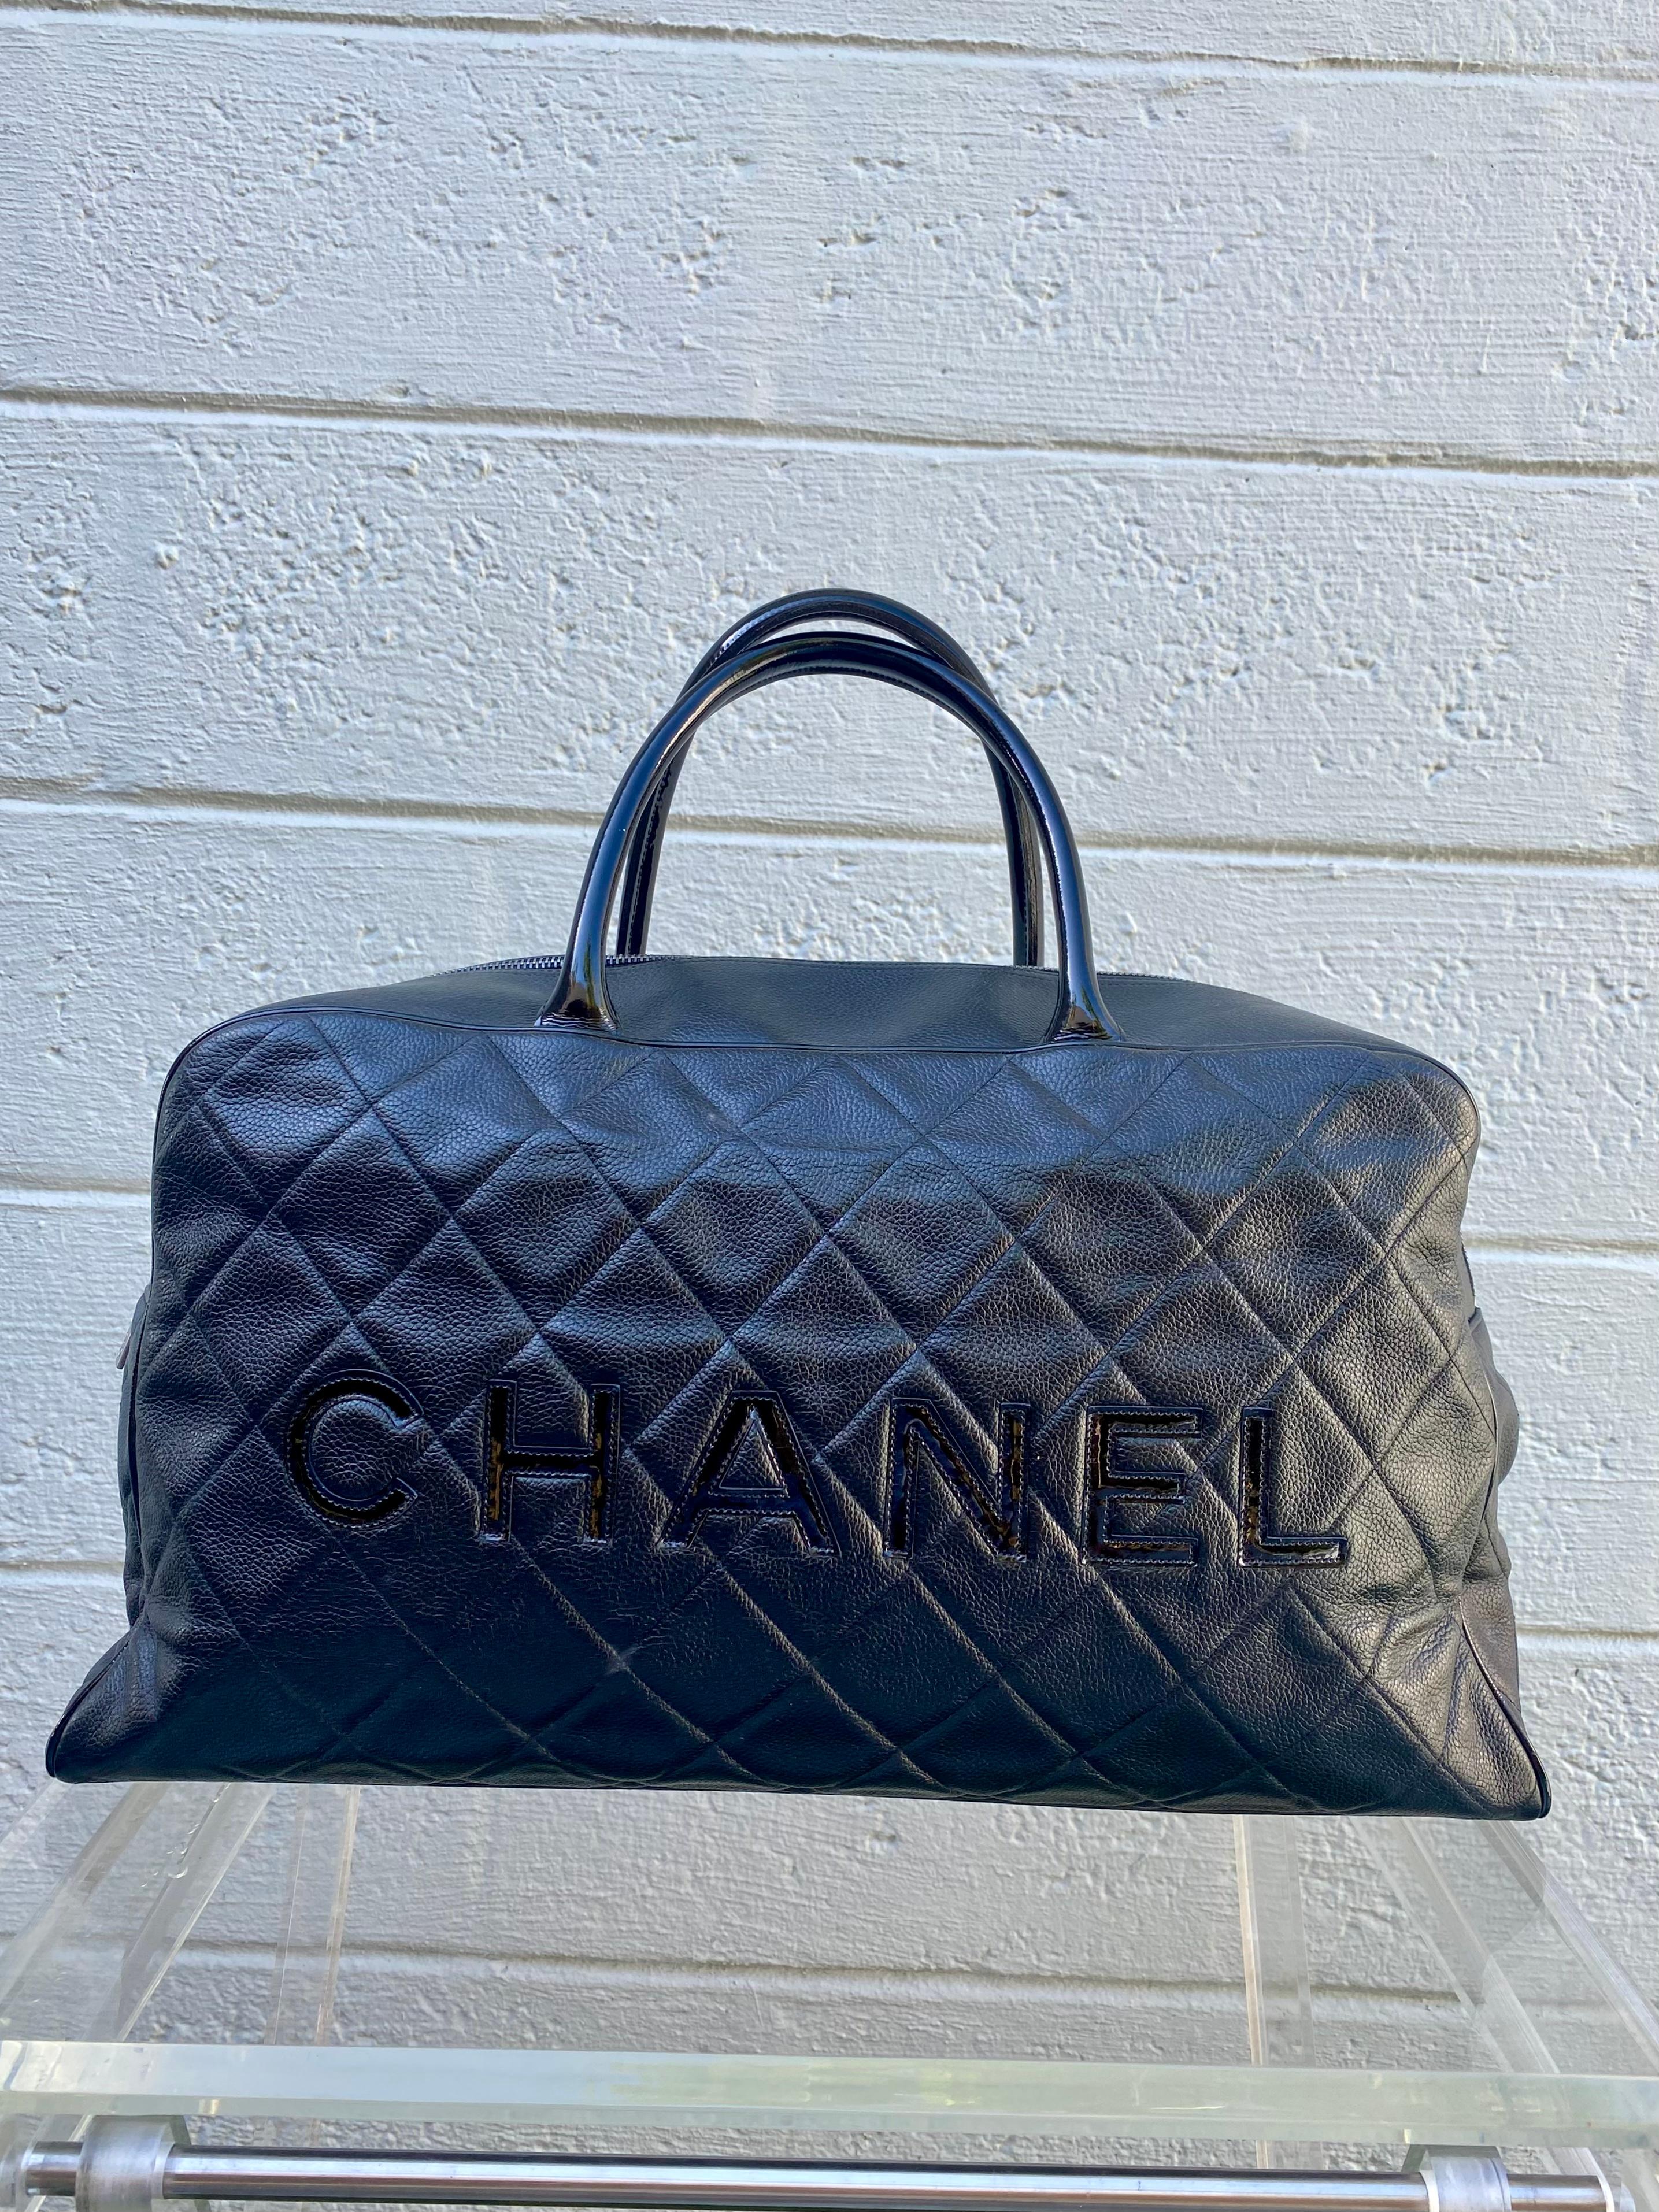 Chanel Rare Vintage Black Caviar Weekender Travel Duffle Shopper Bag For Sale 2